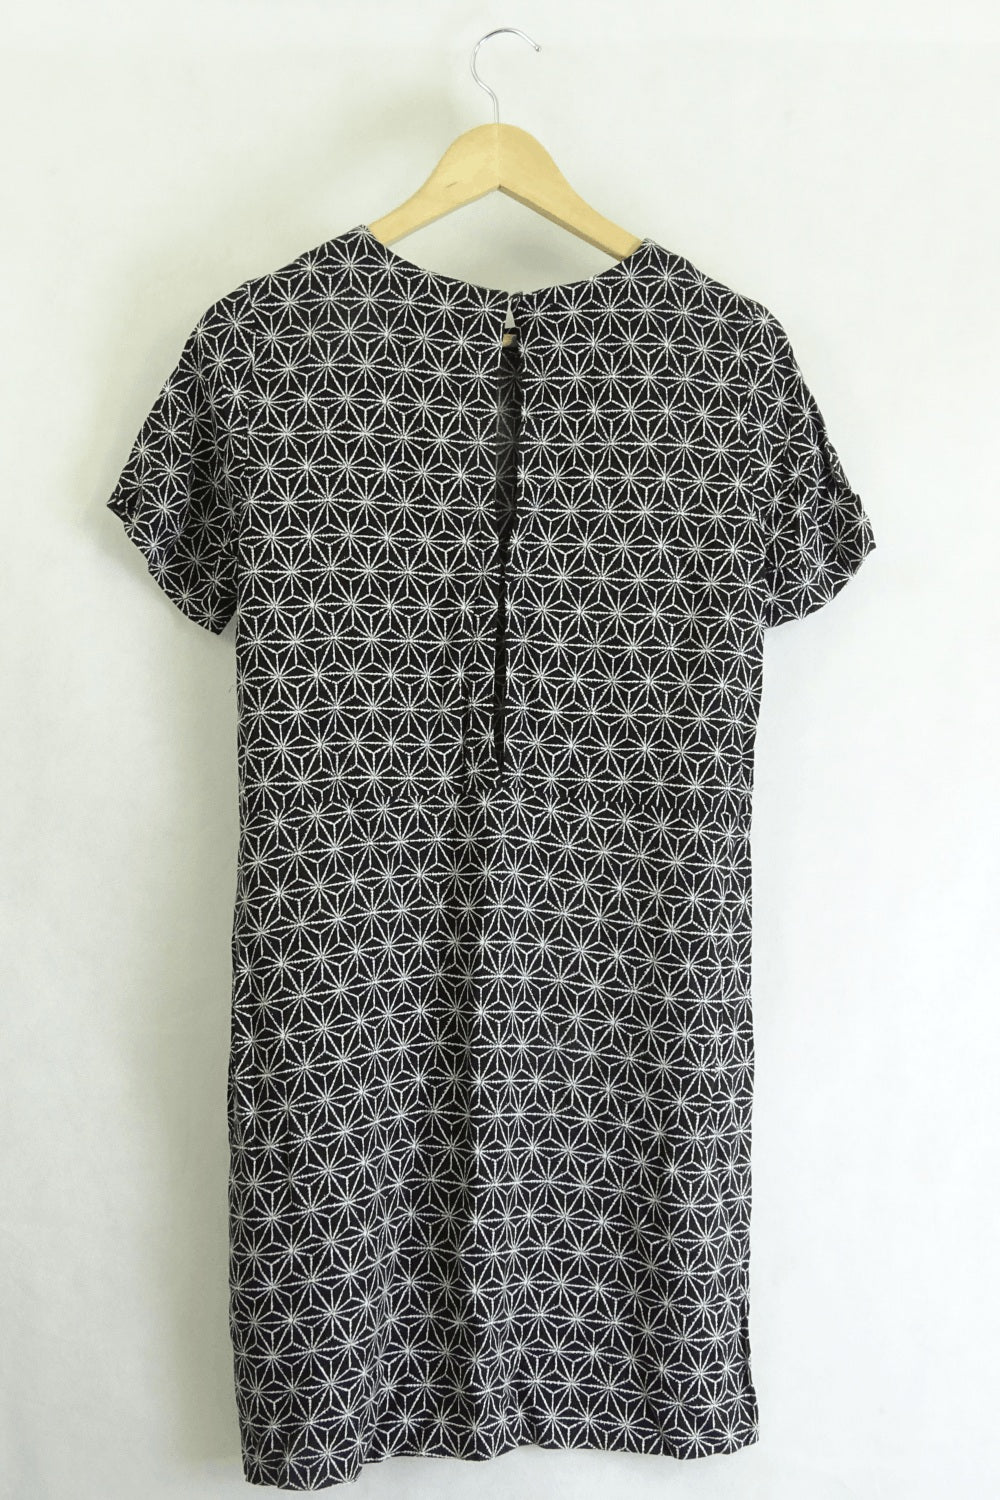 H&amp;M Black and White Geometric Print Shirt Dress 8